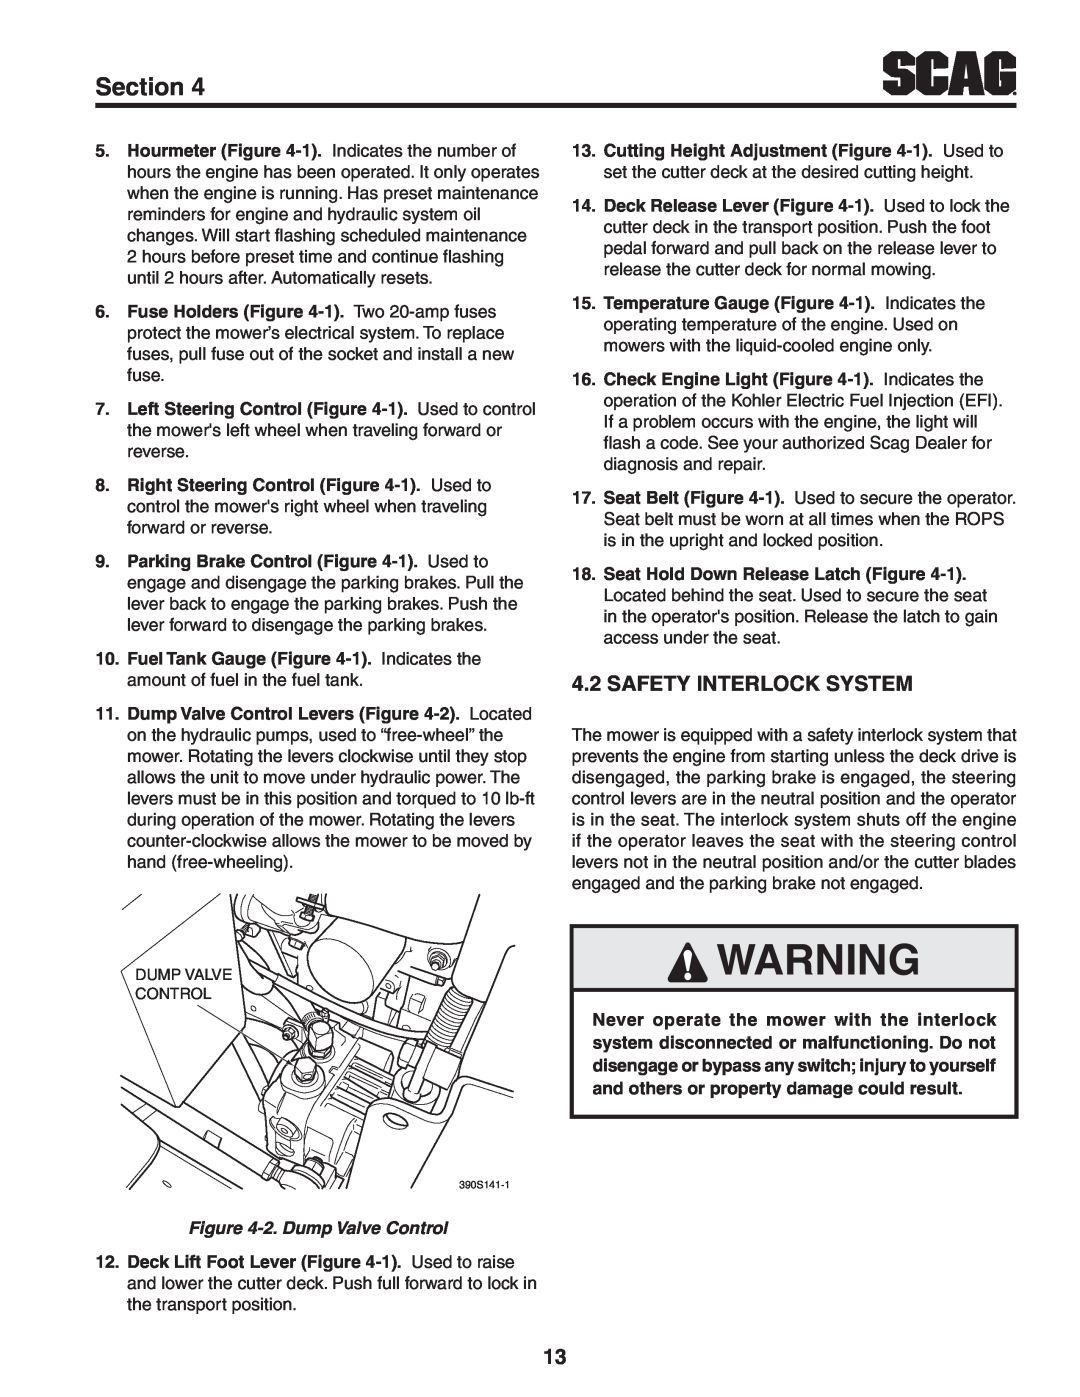 Scag Power Equipment STT-31EFI-SS operating instructions Safety Interlock System, Section, 2. Dump Valve Control 